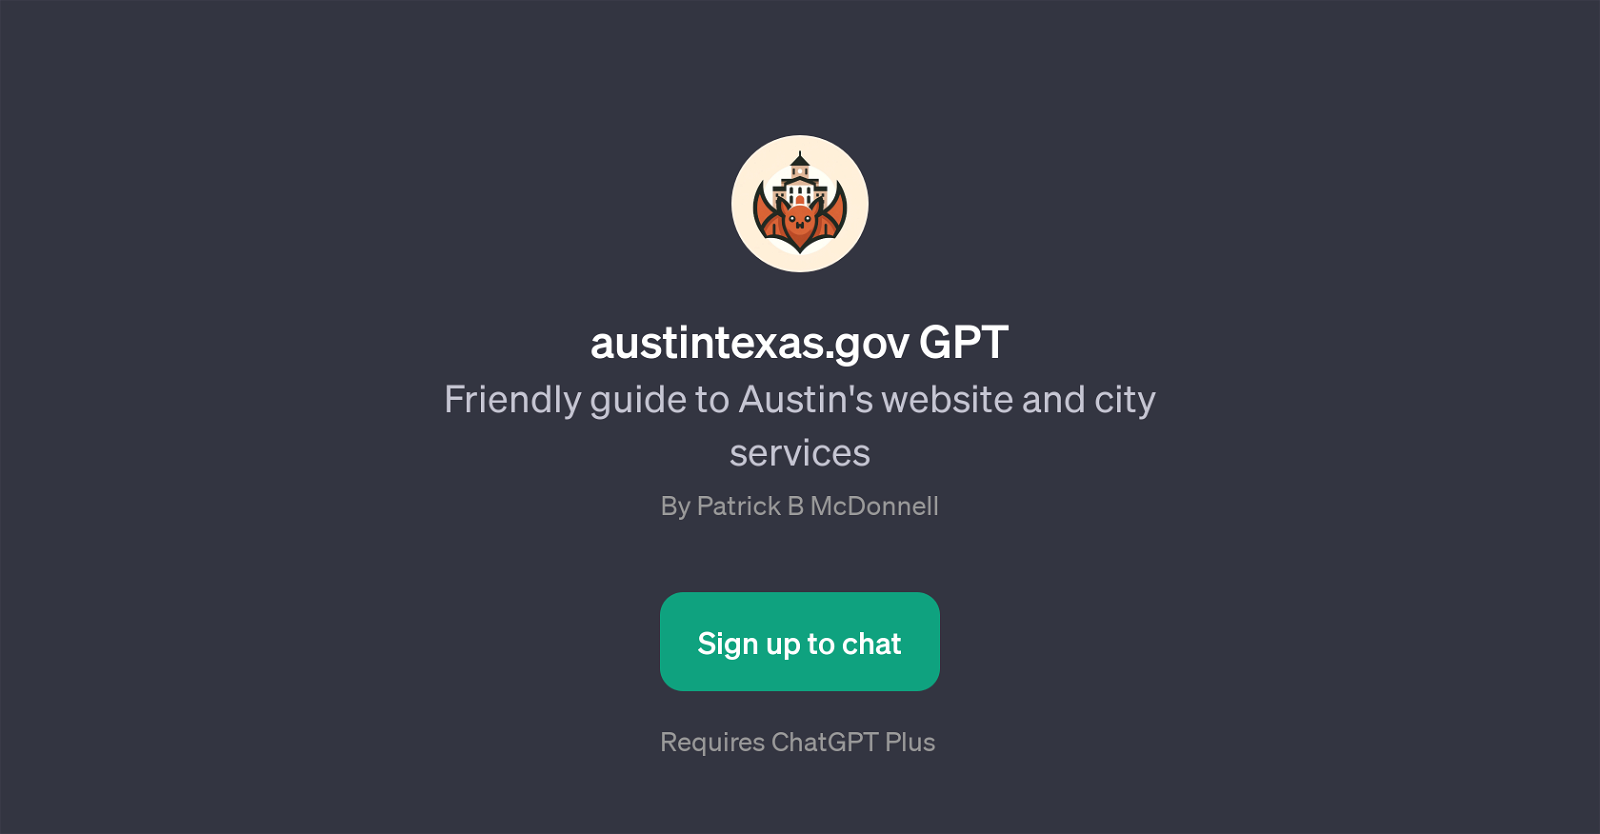 austintexas.gov GPT website